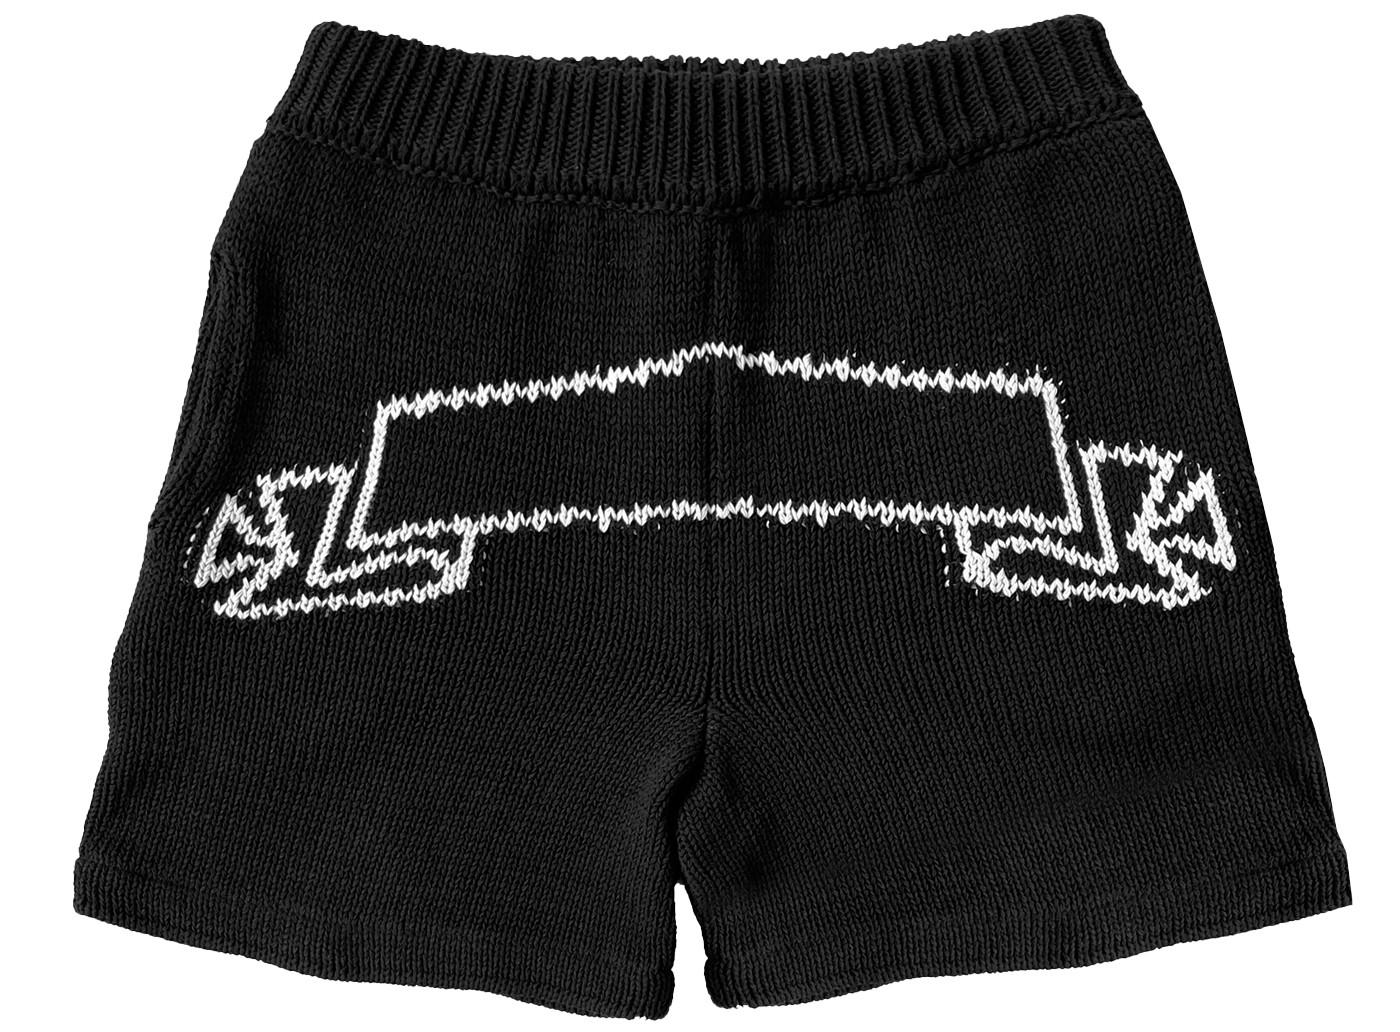 Askyurself Banned Chunky Knit Short